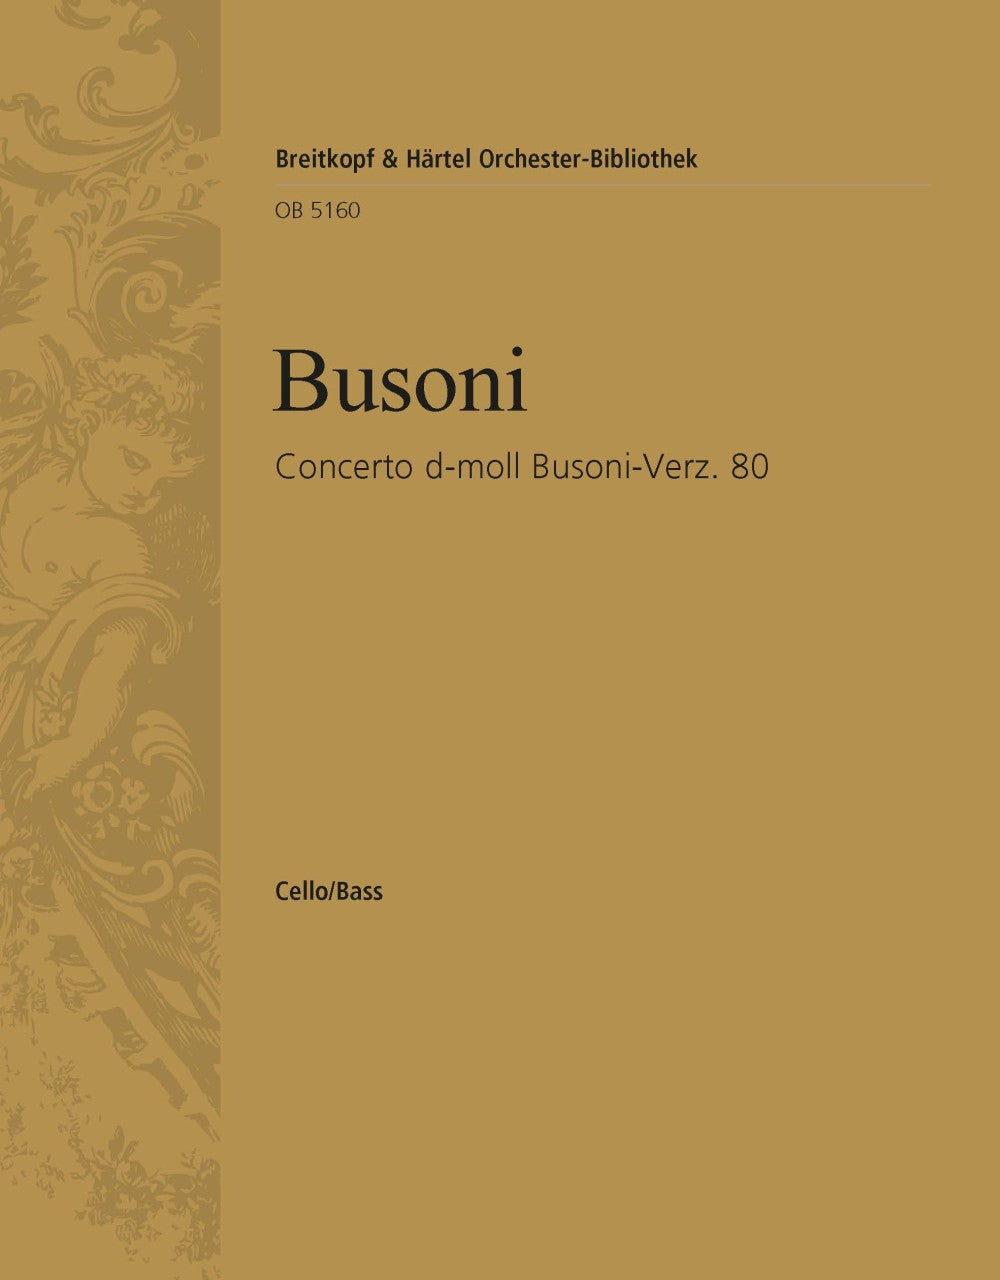 Busoni: Piano Concerto in D Minor, BV 80, Op. 17 (Version for Orchestra)